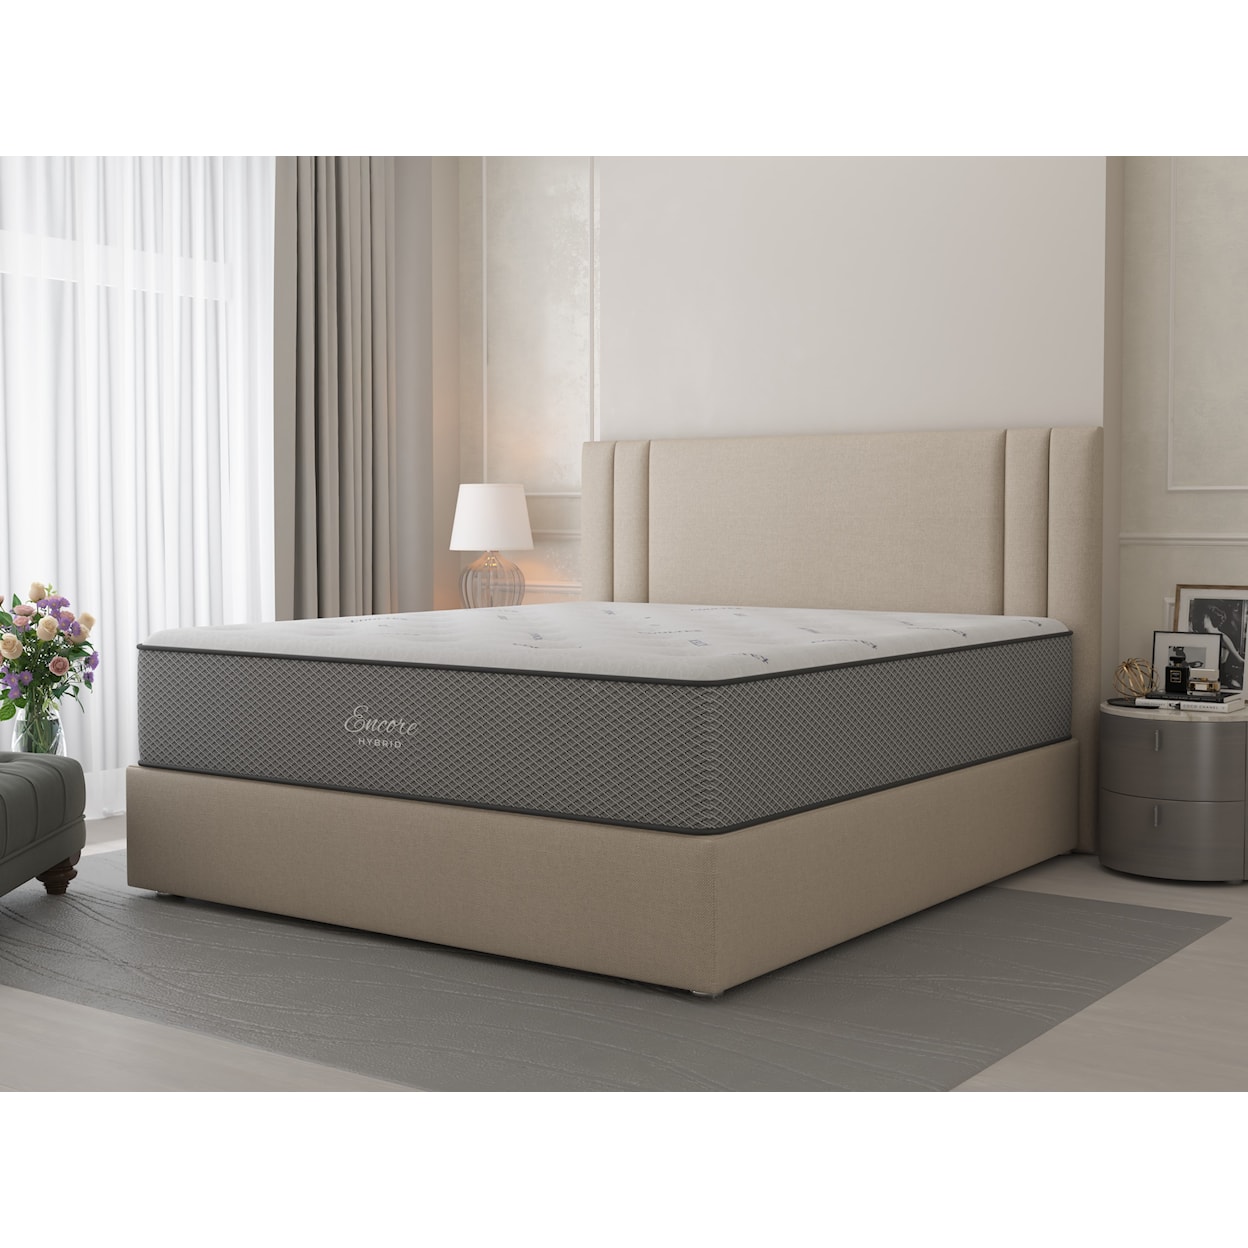 Sherwood Bedding Nightrest Hybrid Luxury Firm 10" Full  Luxury Firm Mattress